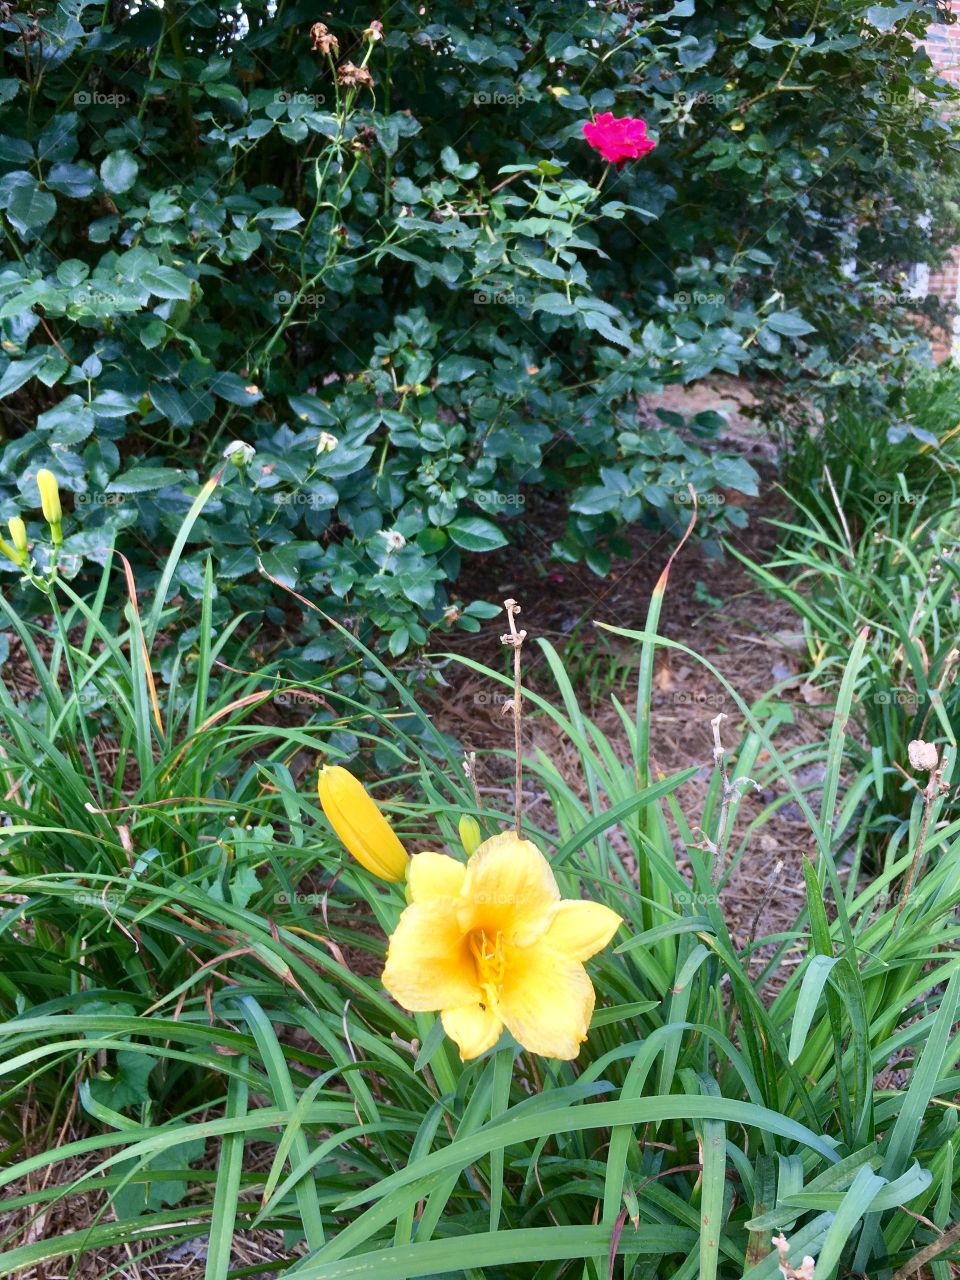 Daffodils and a rose bush.